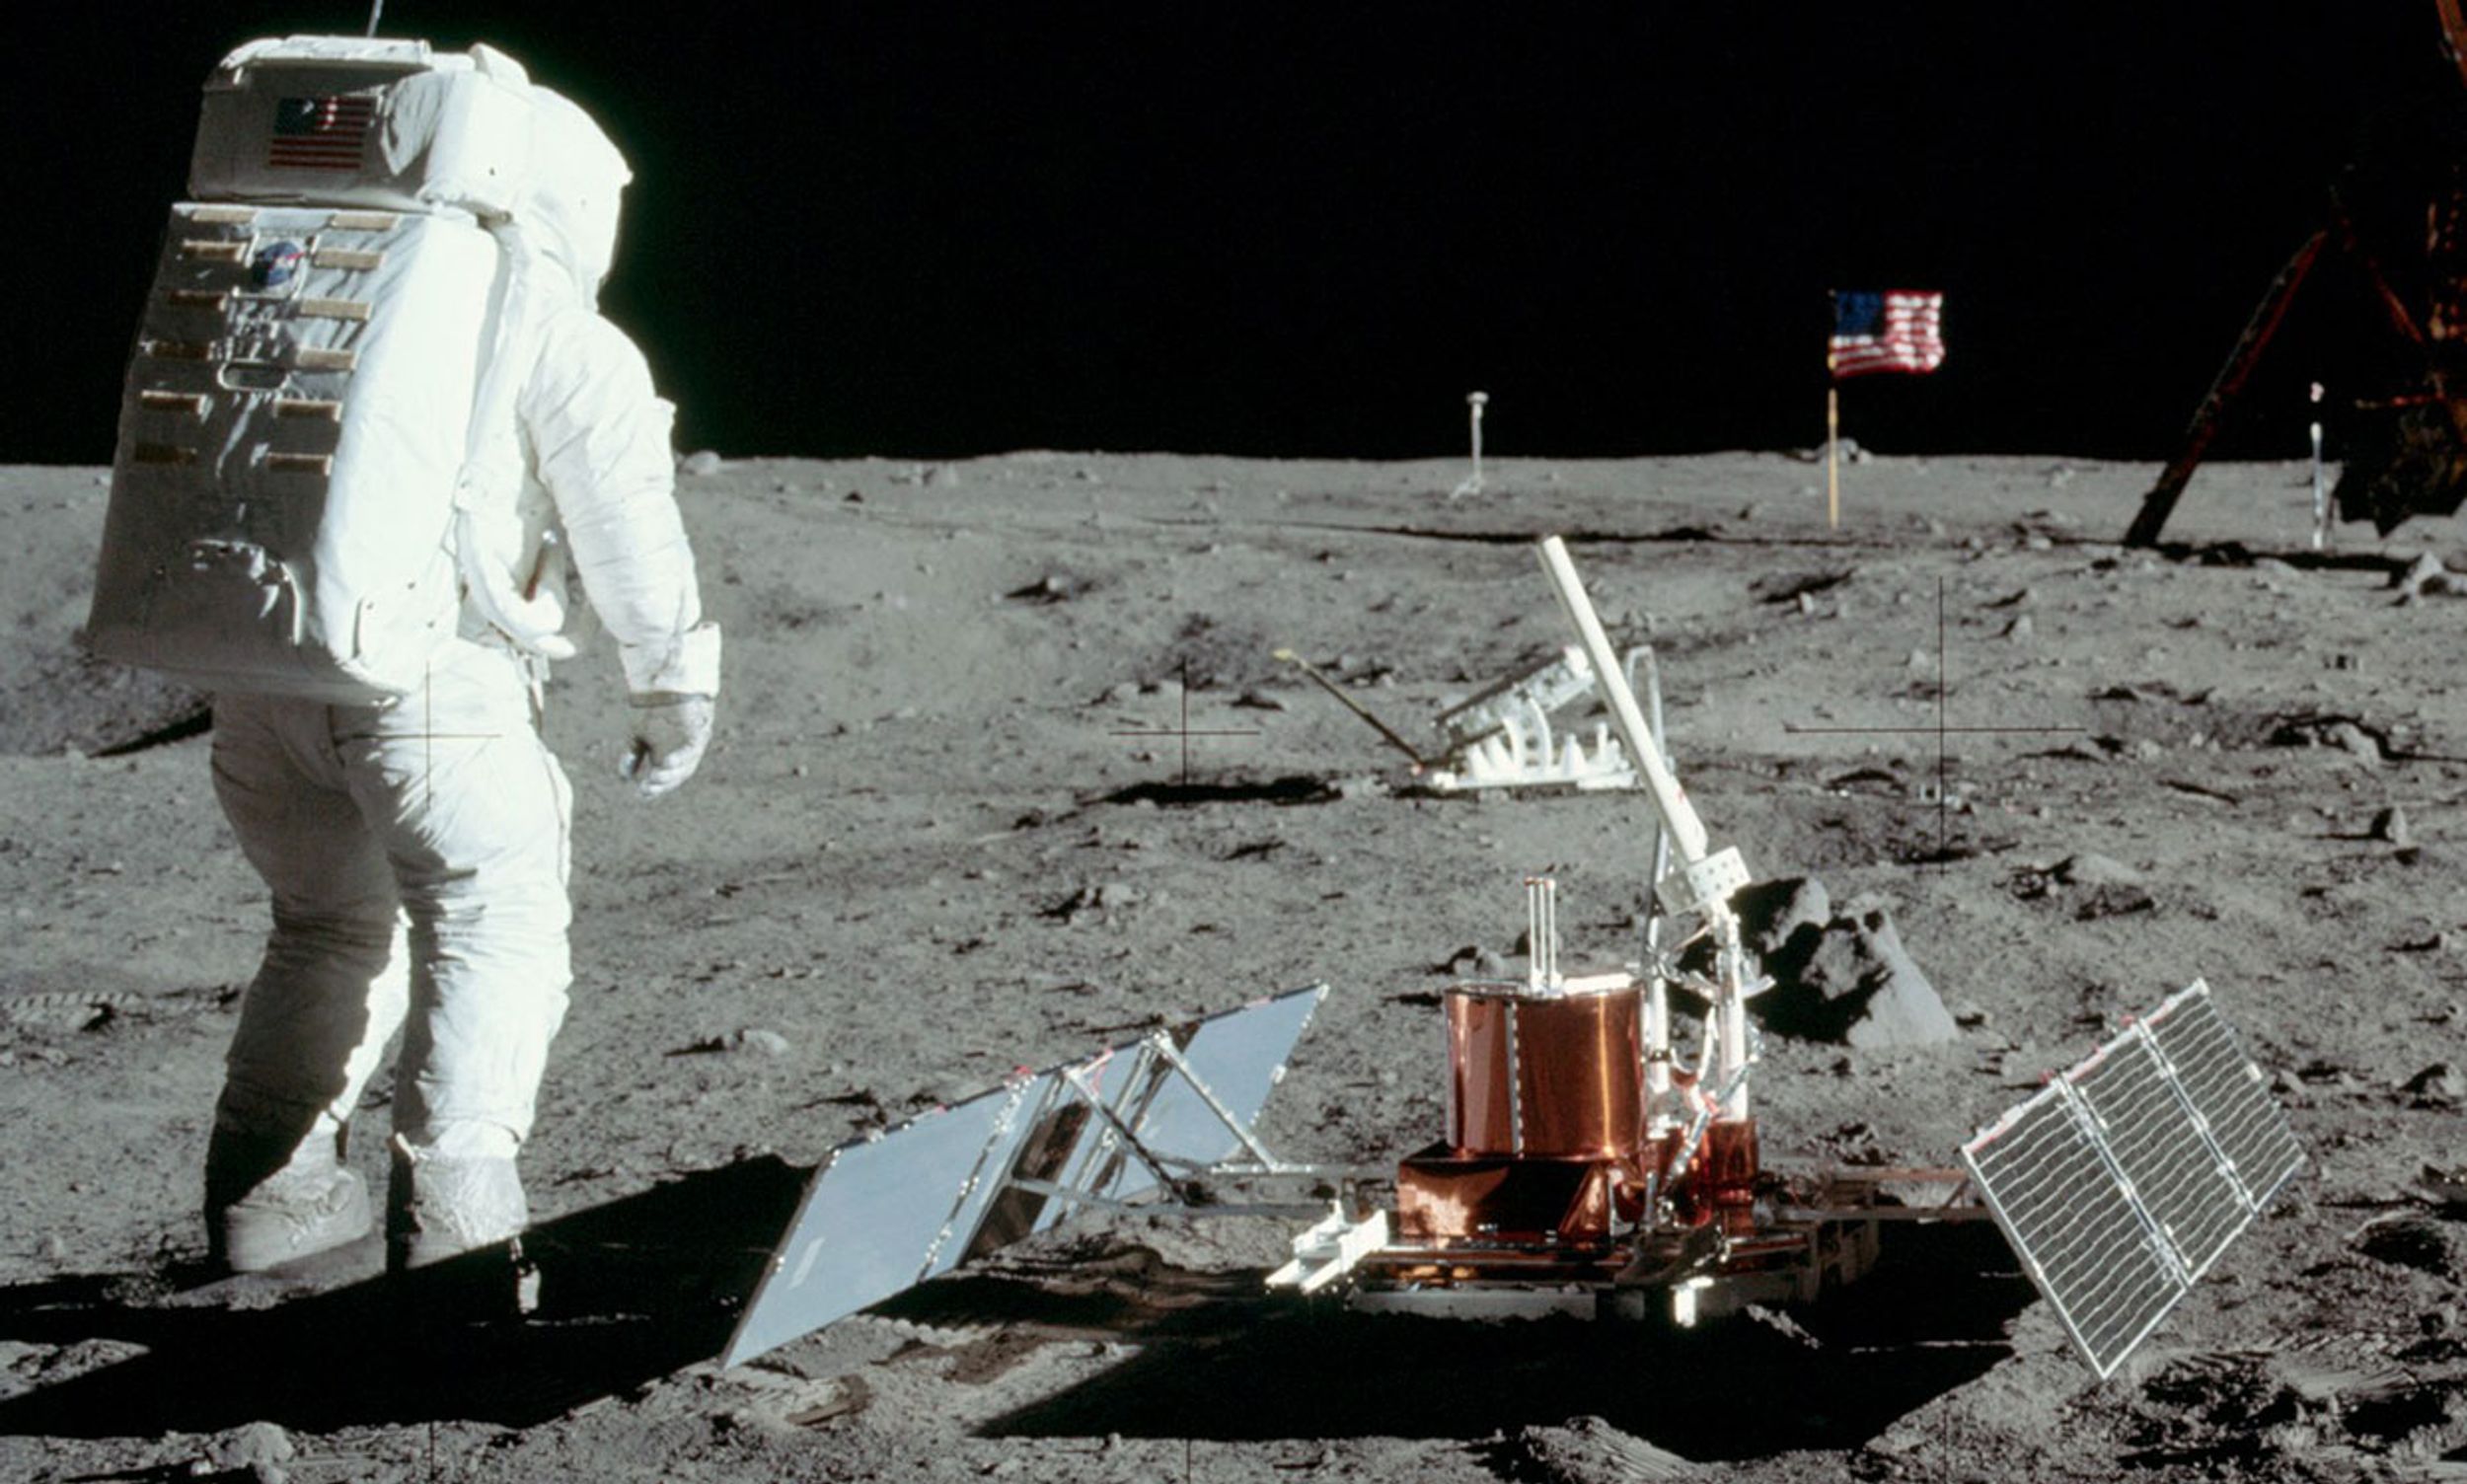 Apollo 11 astronaut Buzz Aldrin with the seismic experiment.